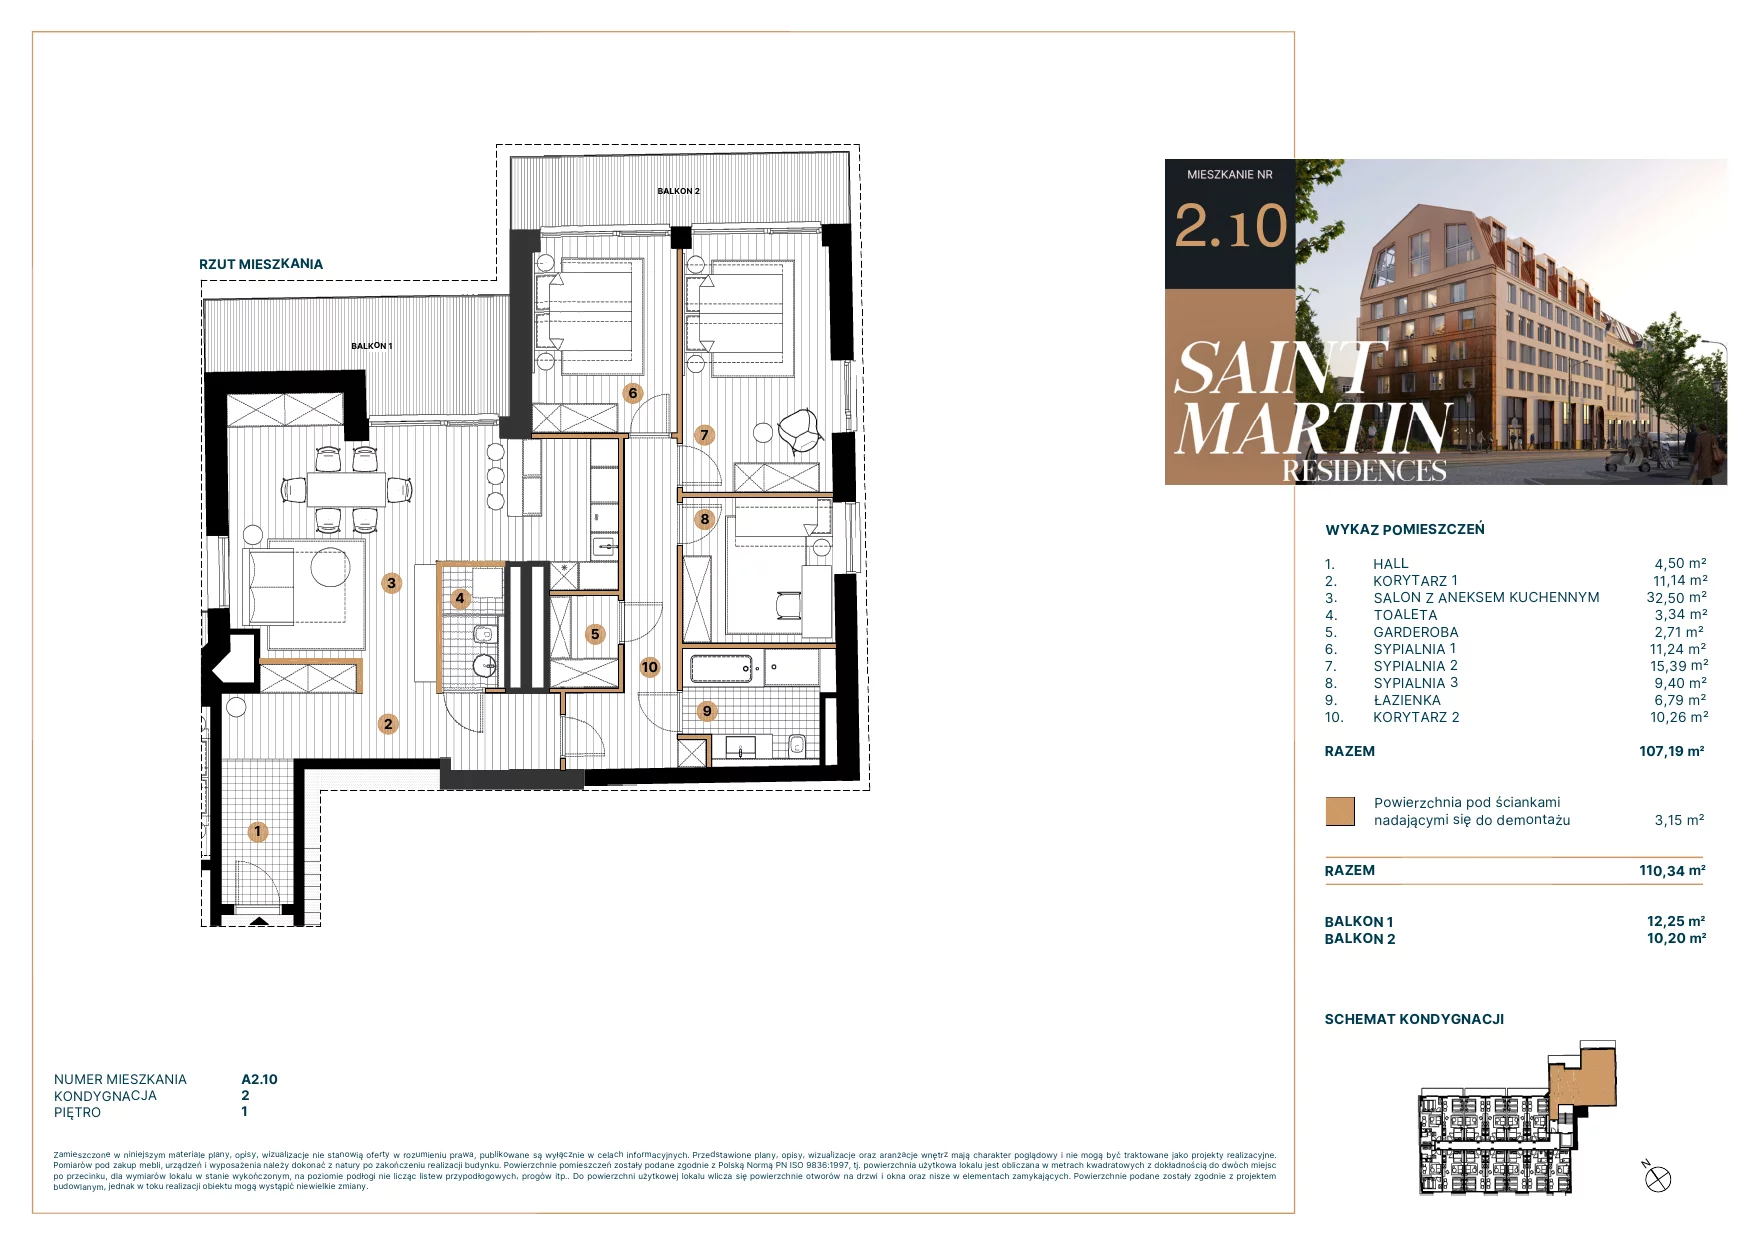 Apartament 107,89 m², piętro 1, oferta nr A2.10, Saint Martin Residences II, Poznań, Stare Miasto, Stare Miasto, ul. Podgórna 7